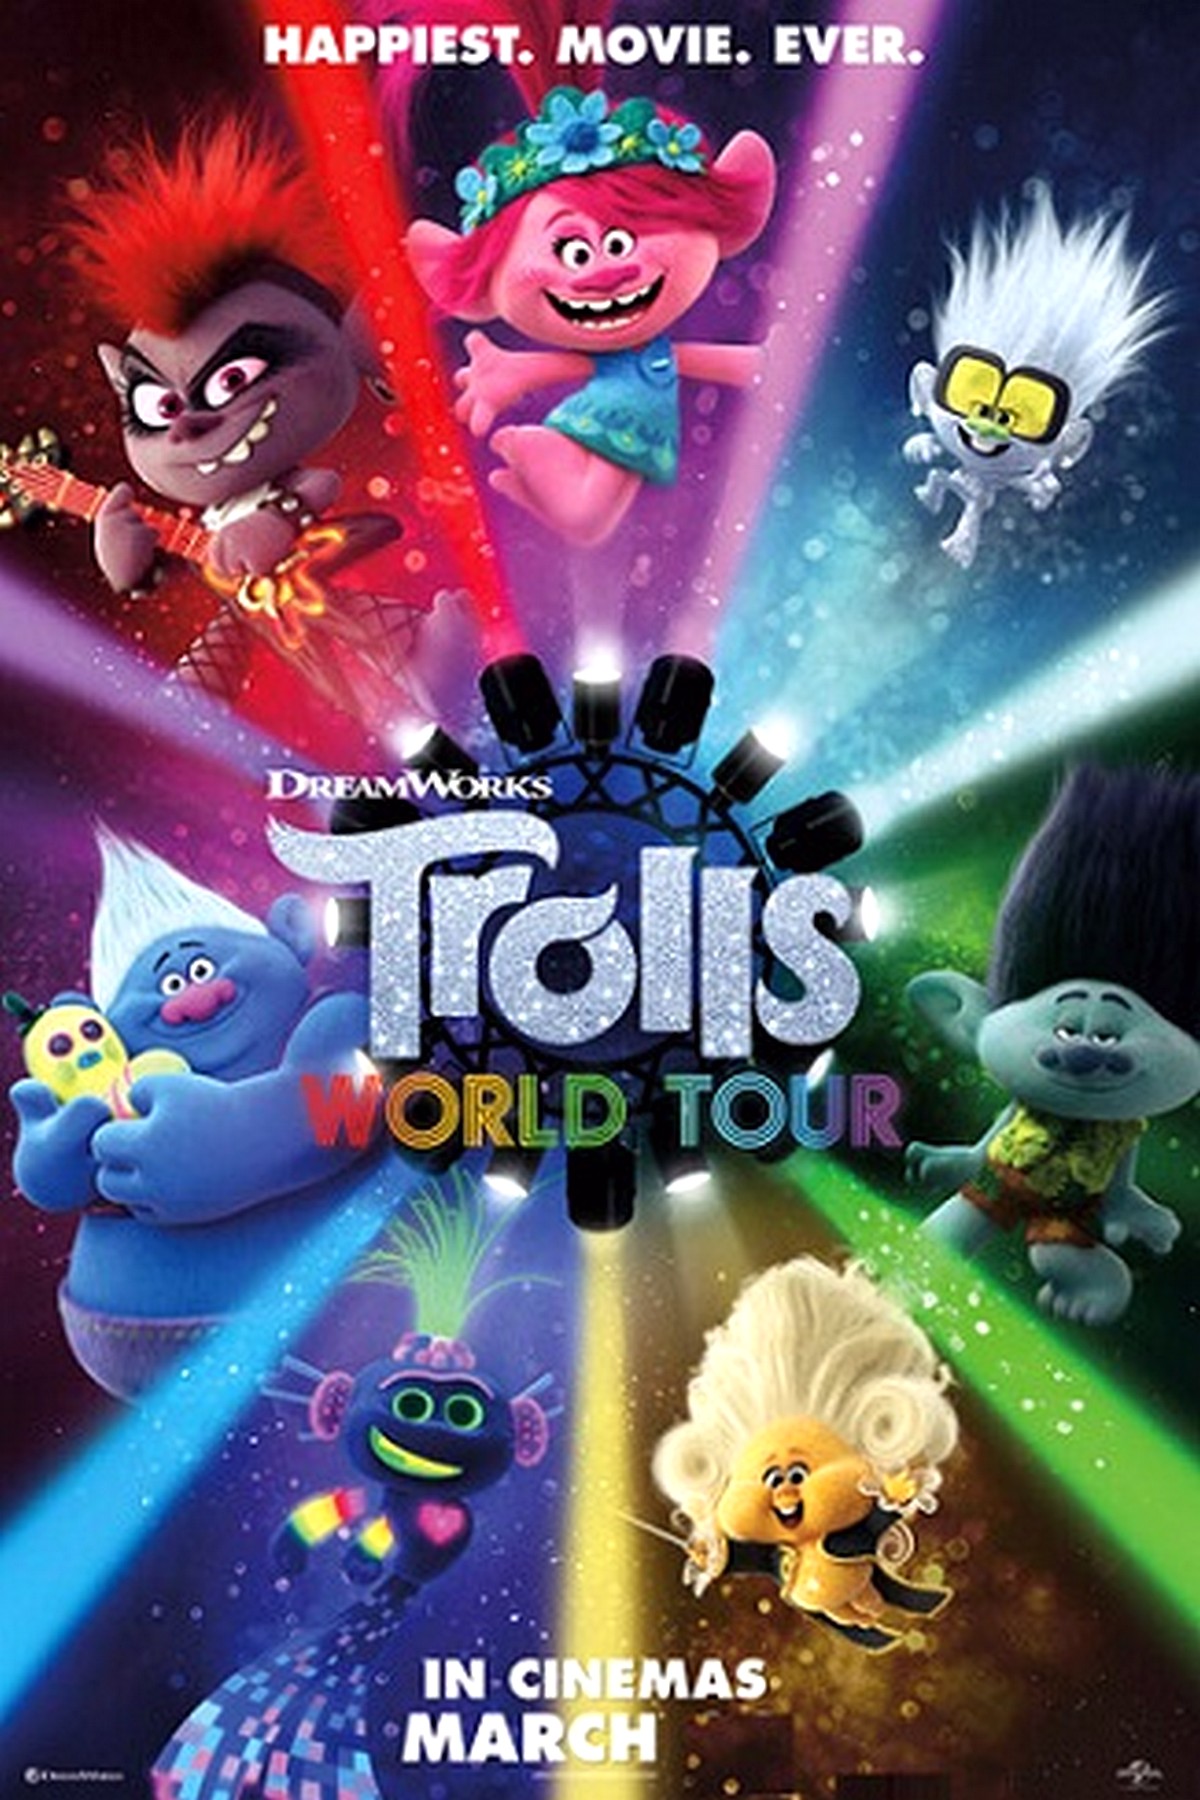 009-March-2020-Malaysia-Movie-Promotion-Trolls-World-Tour - Entertainment 